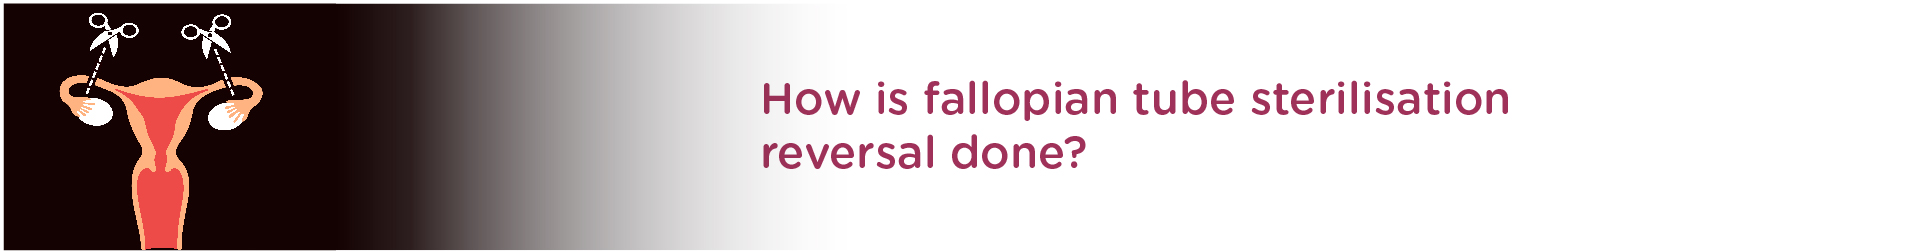 How is Fallopian Tube Sterilization Reversal Done?